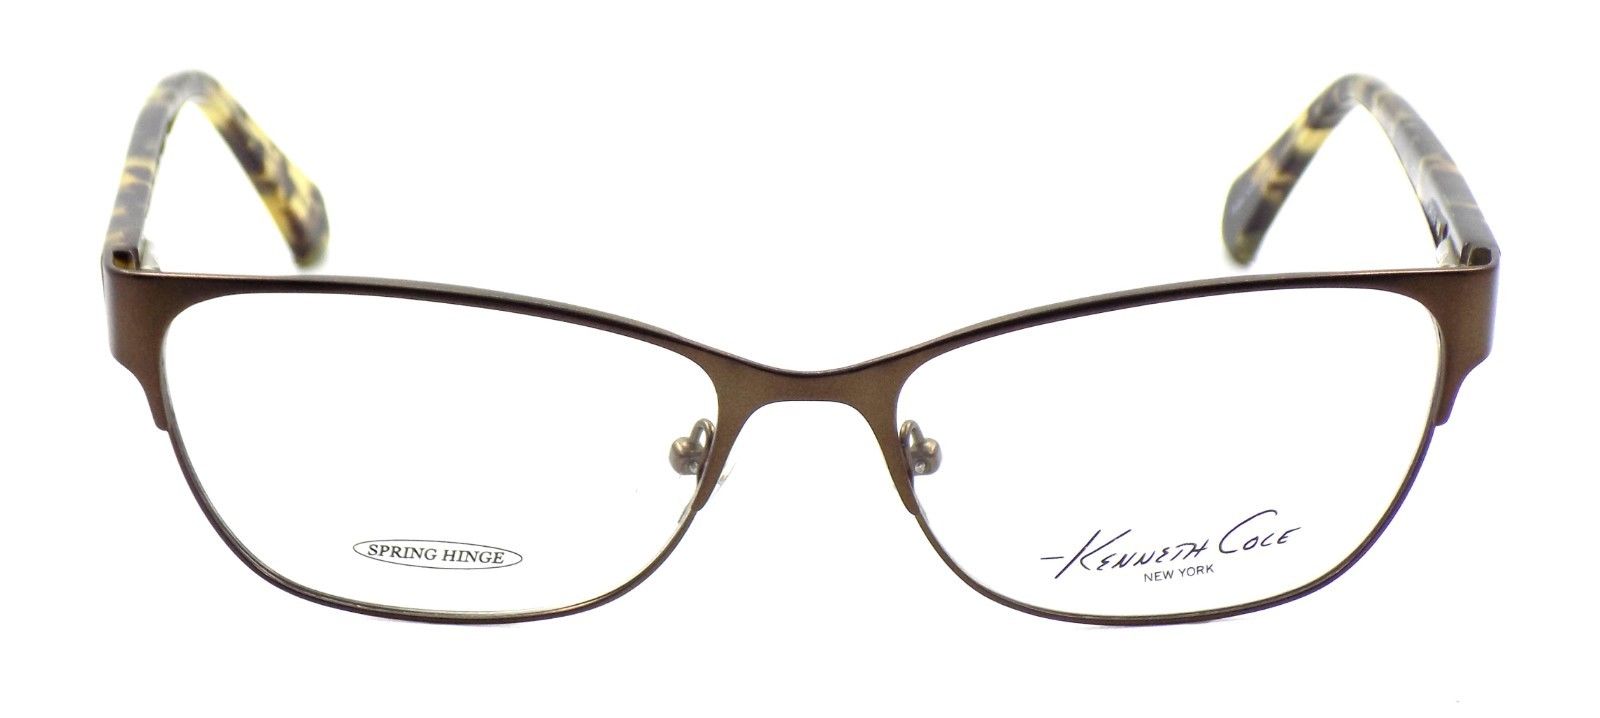 2-Kenneth Cole NY KC0232 049 Women's Eyeglasses Frames 54-16-140 Matte Dark Brown-664689709793-IKSpecs